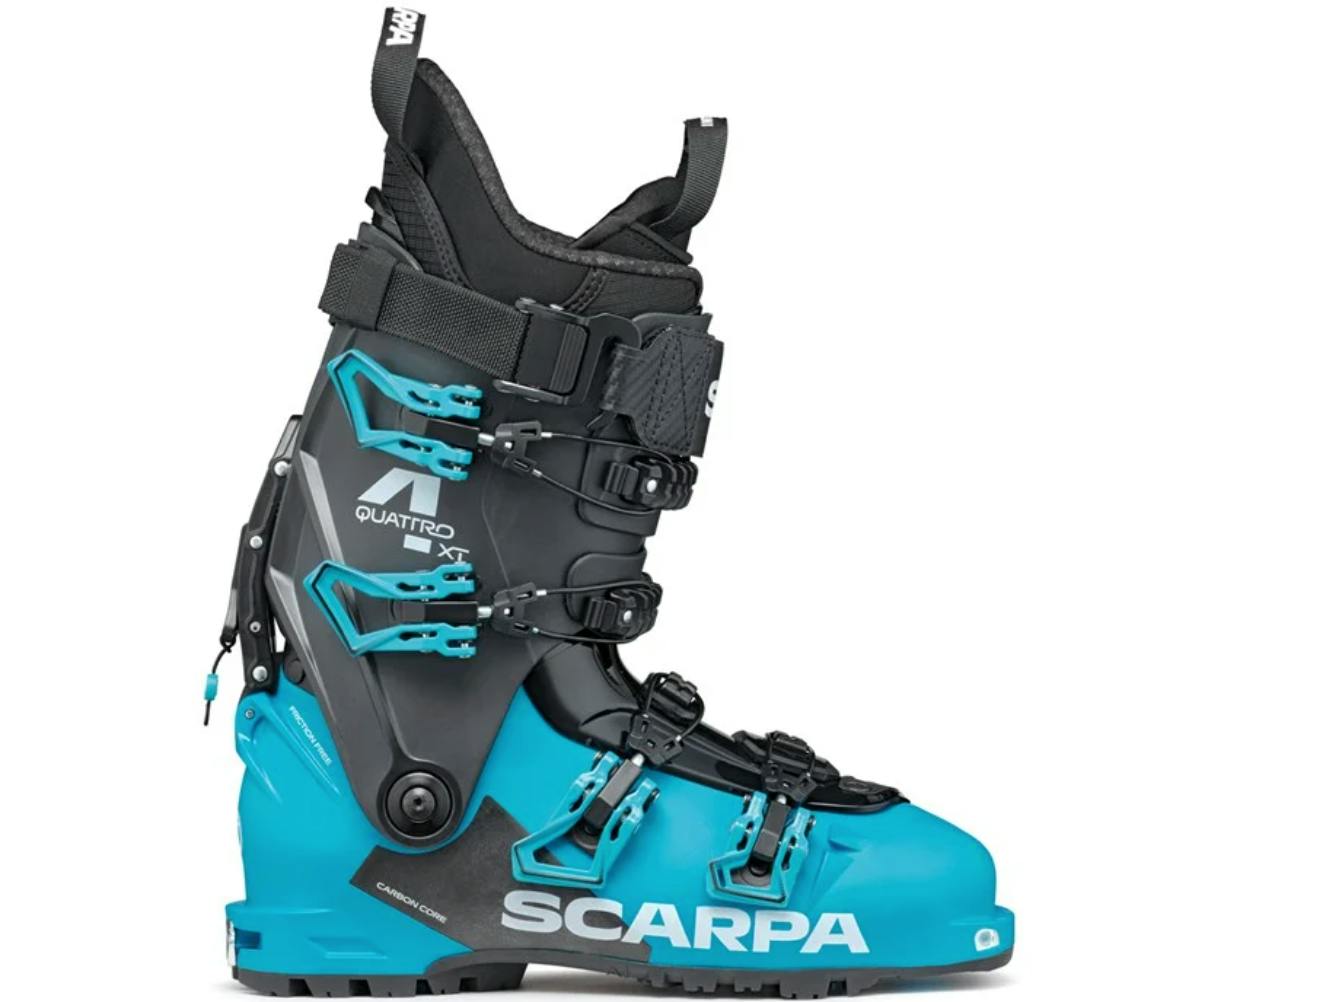 The Scarpa 4-Quattro XT Ski Boot.